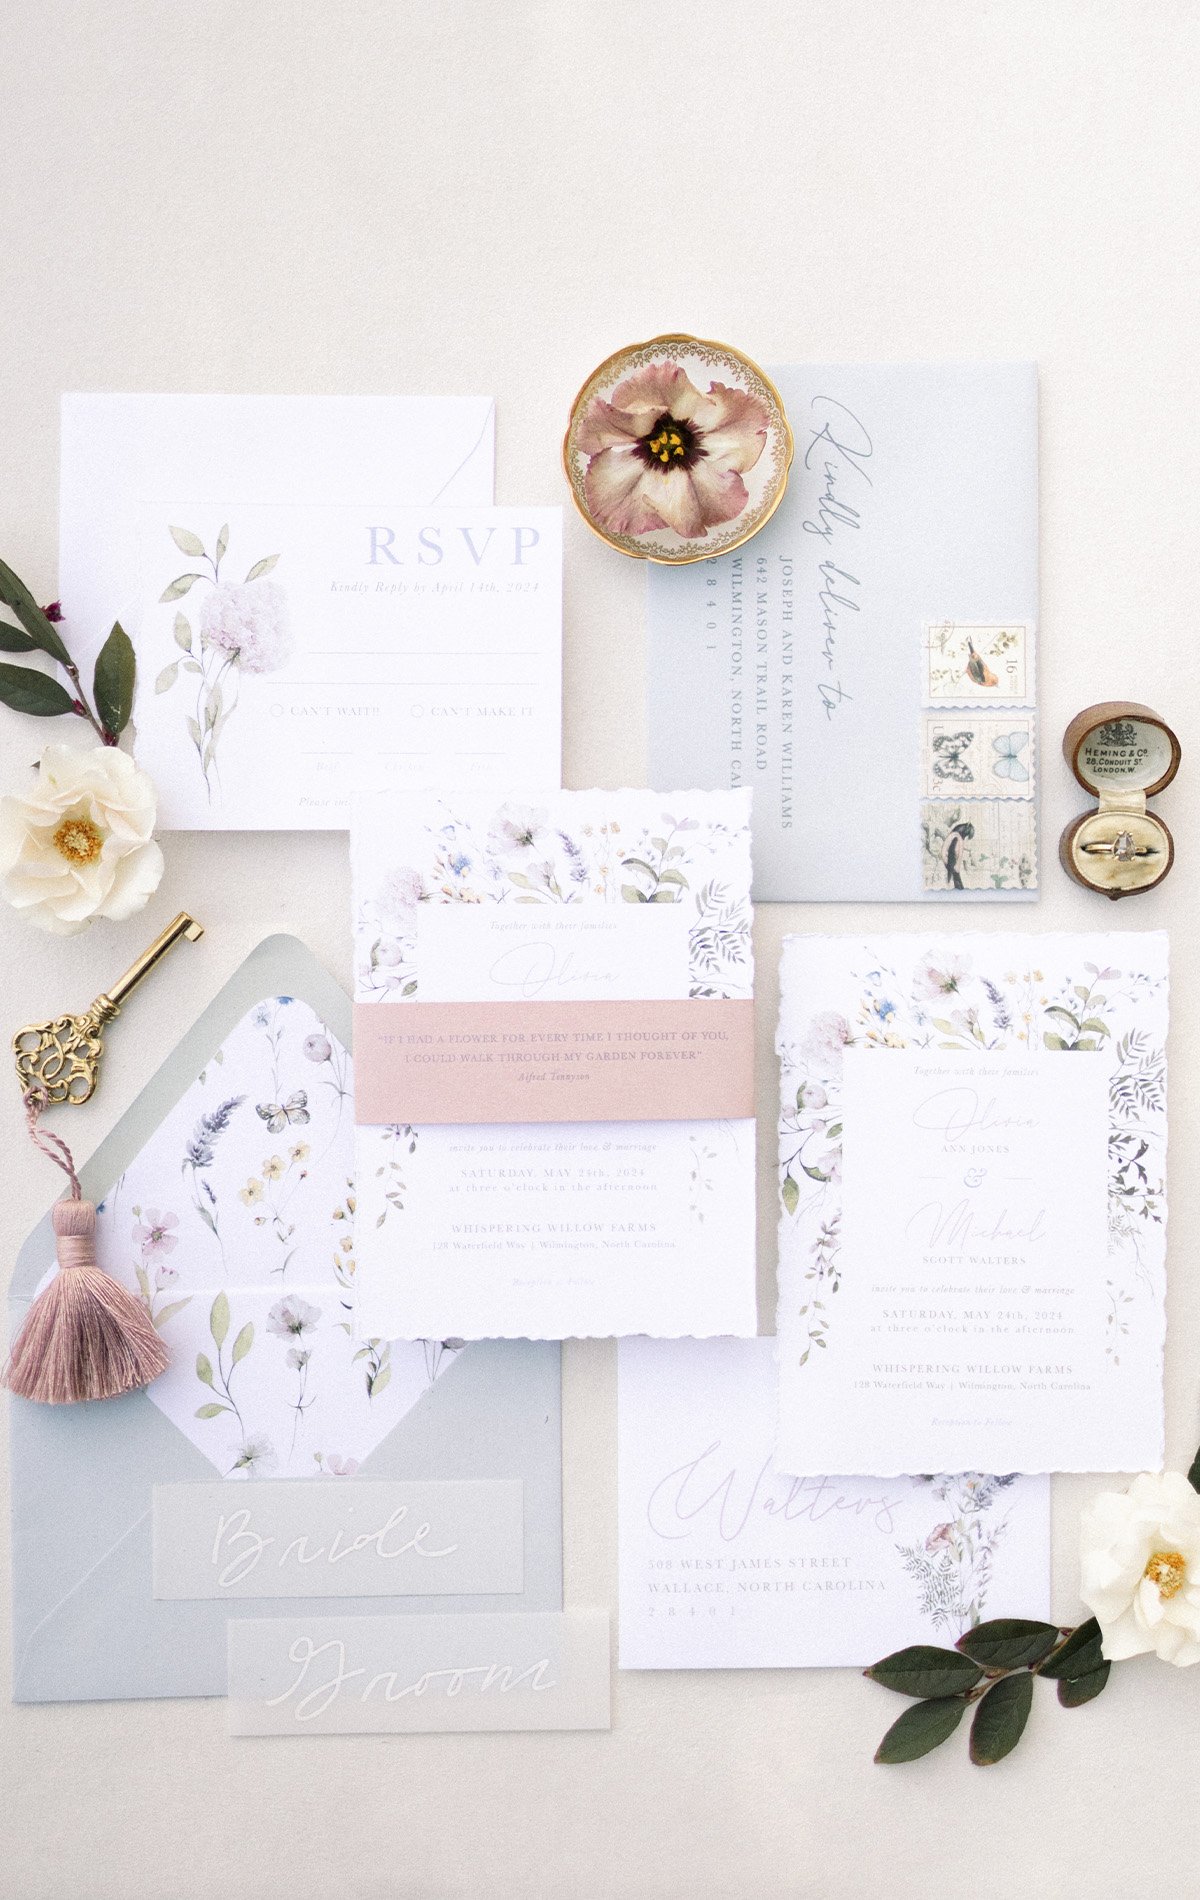 Alexis Scott - Home Website Slider Image - Airlie Gardens watercolor floral wedding invitations